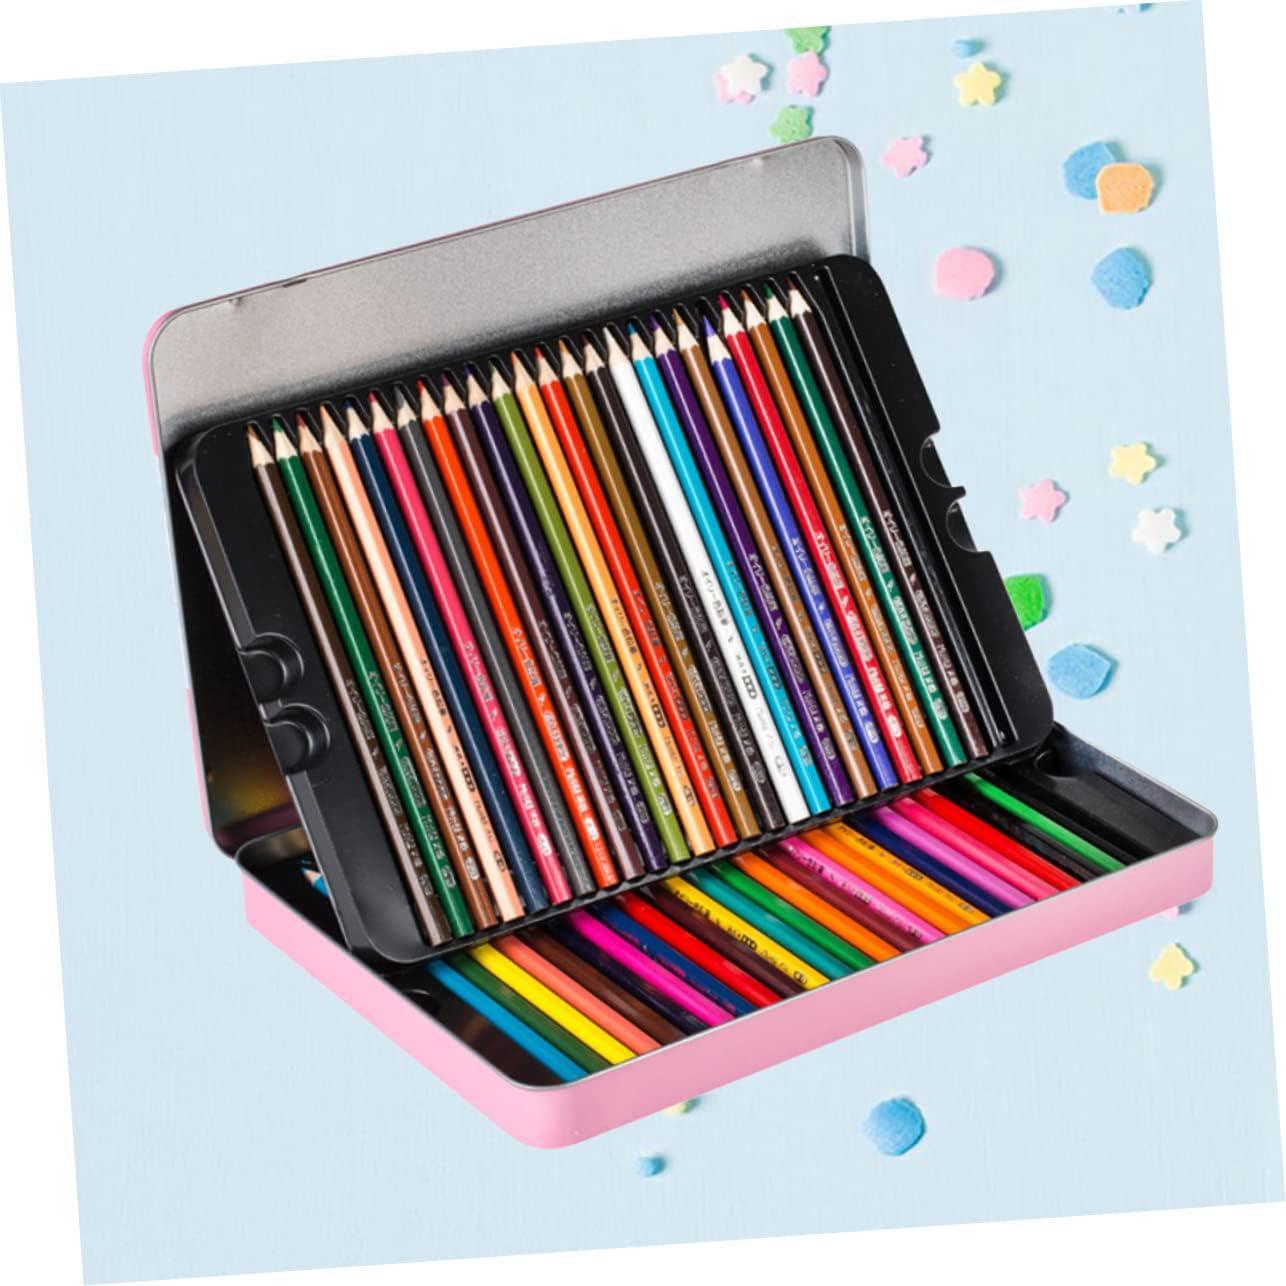  COHEALI 4 Sets Colored Lead Color Pencils for Adult